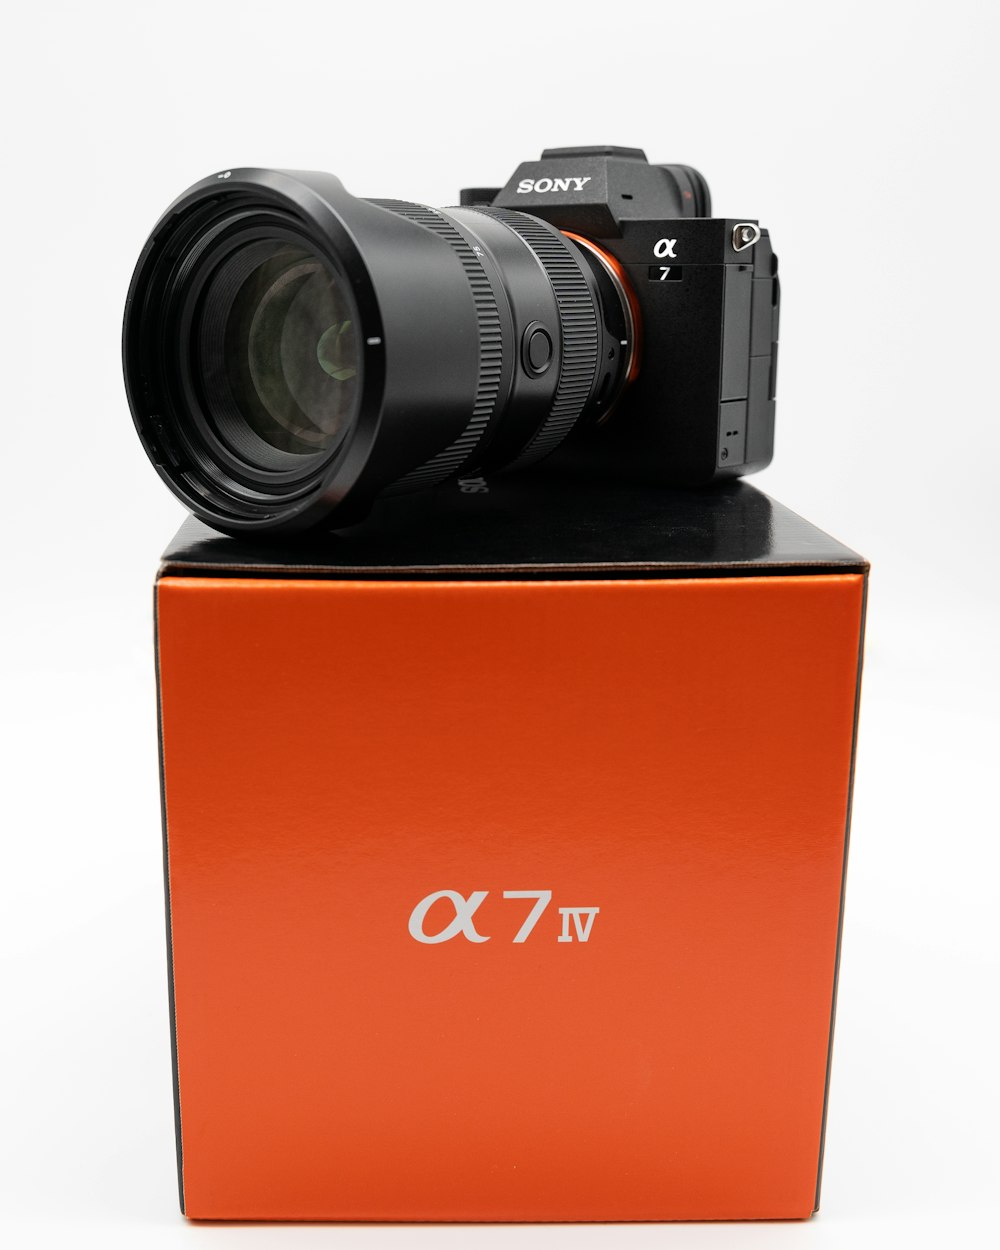 a camera on a box